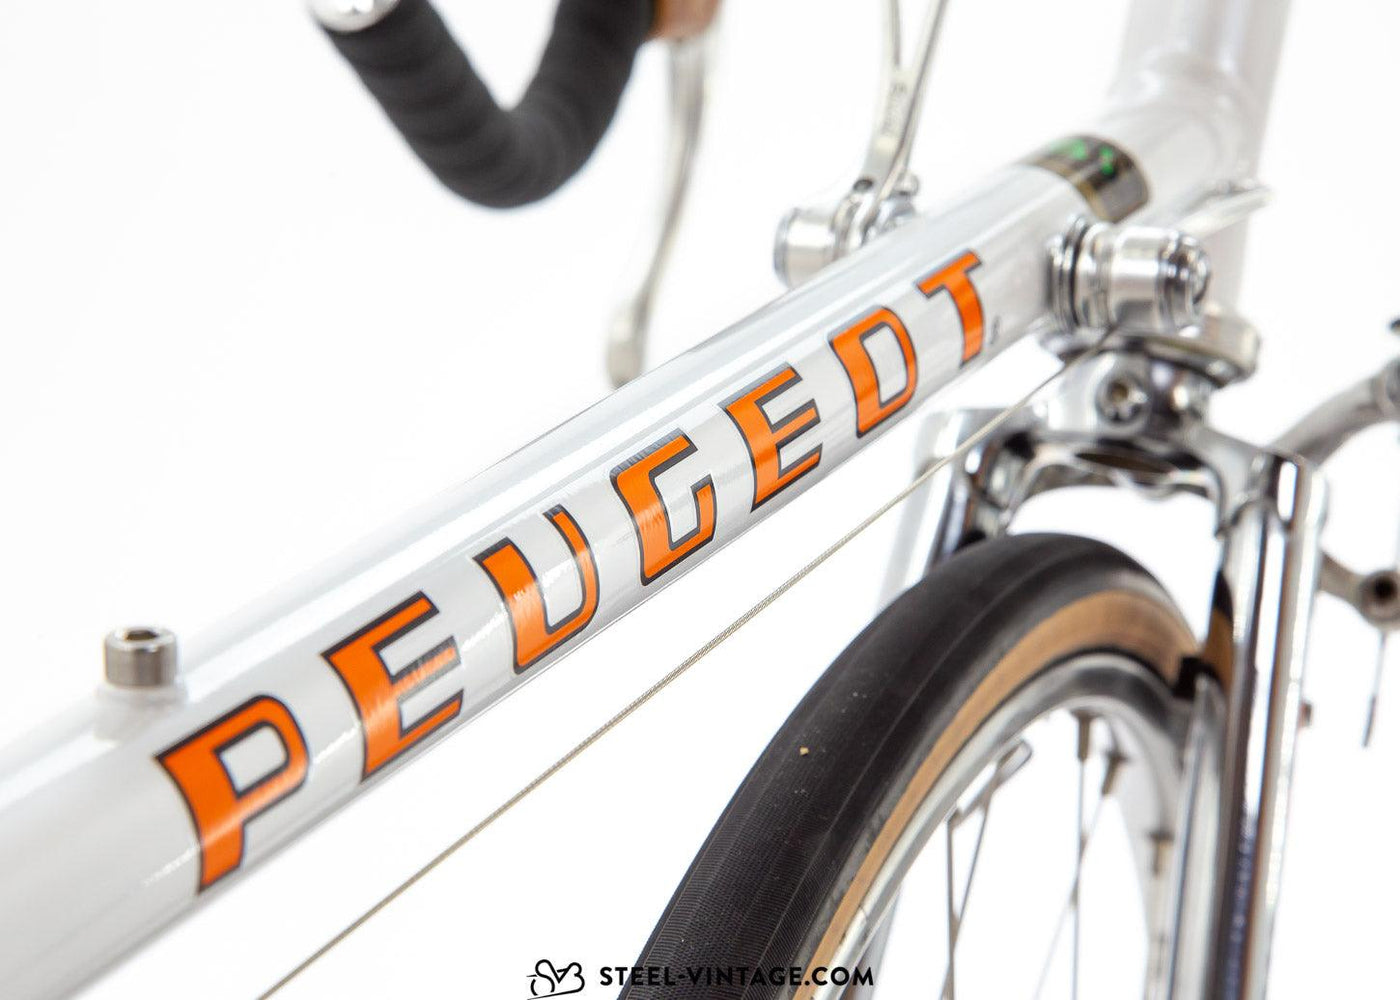 Peugeot Prestige PRO10 1980s - Steel Vintage Bikes